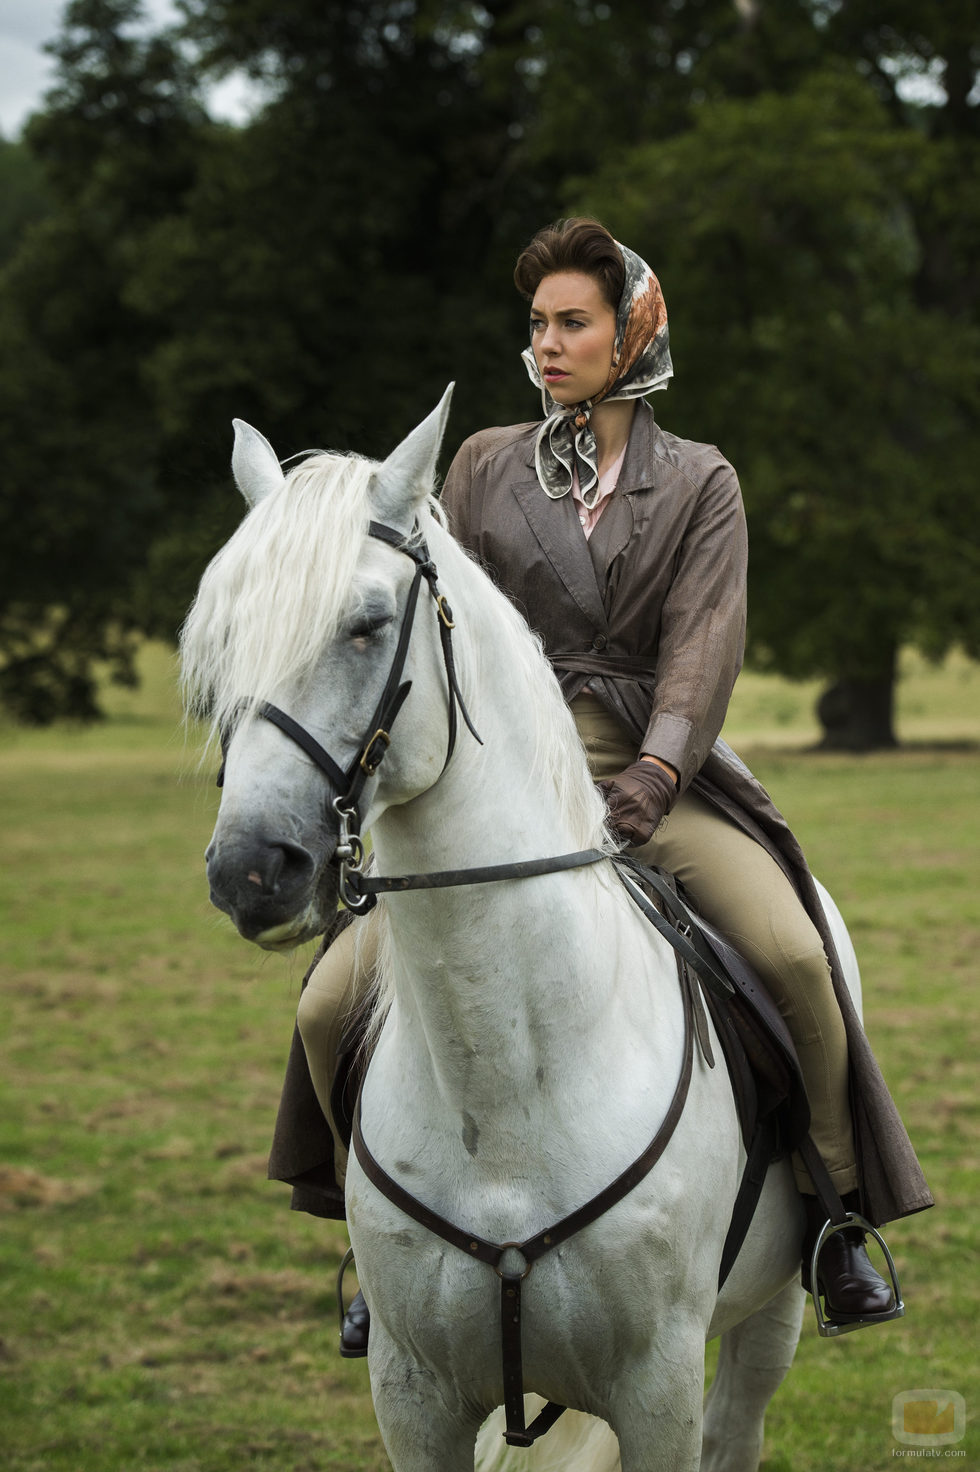 La reina Isabel II en 'The Crown' montando a caballo